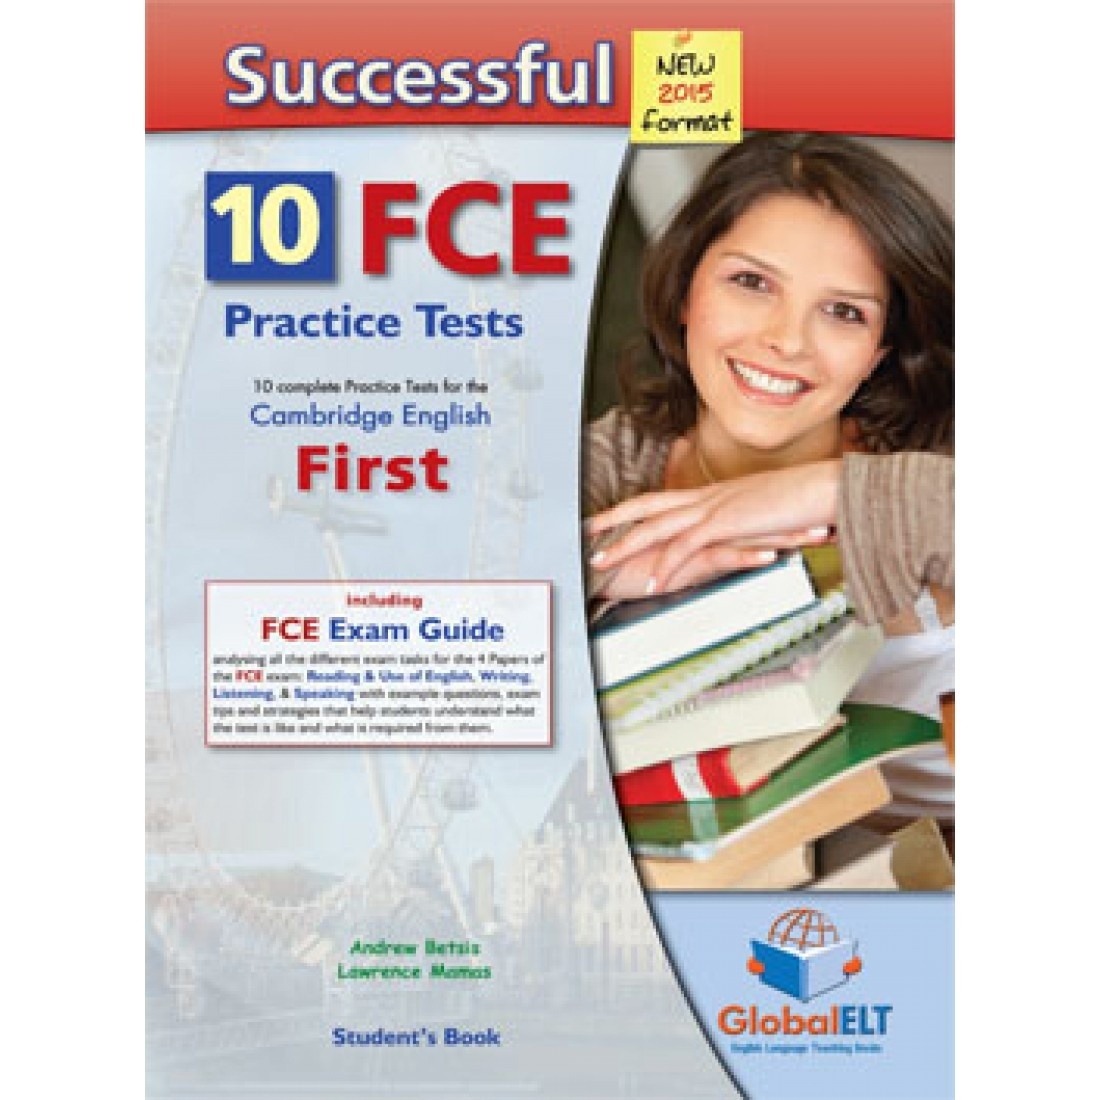 Success ful B2 First 10 FCE Practice Test